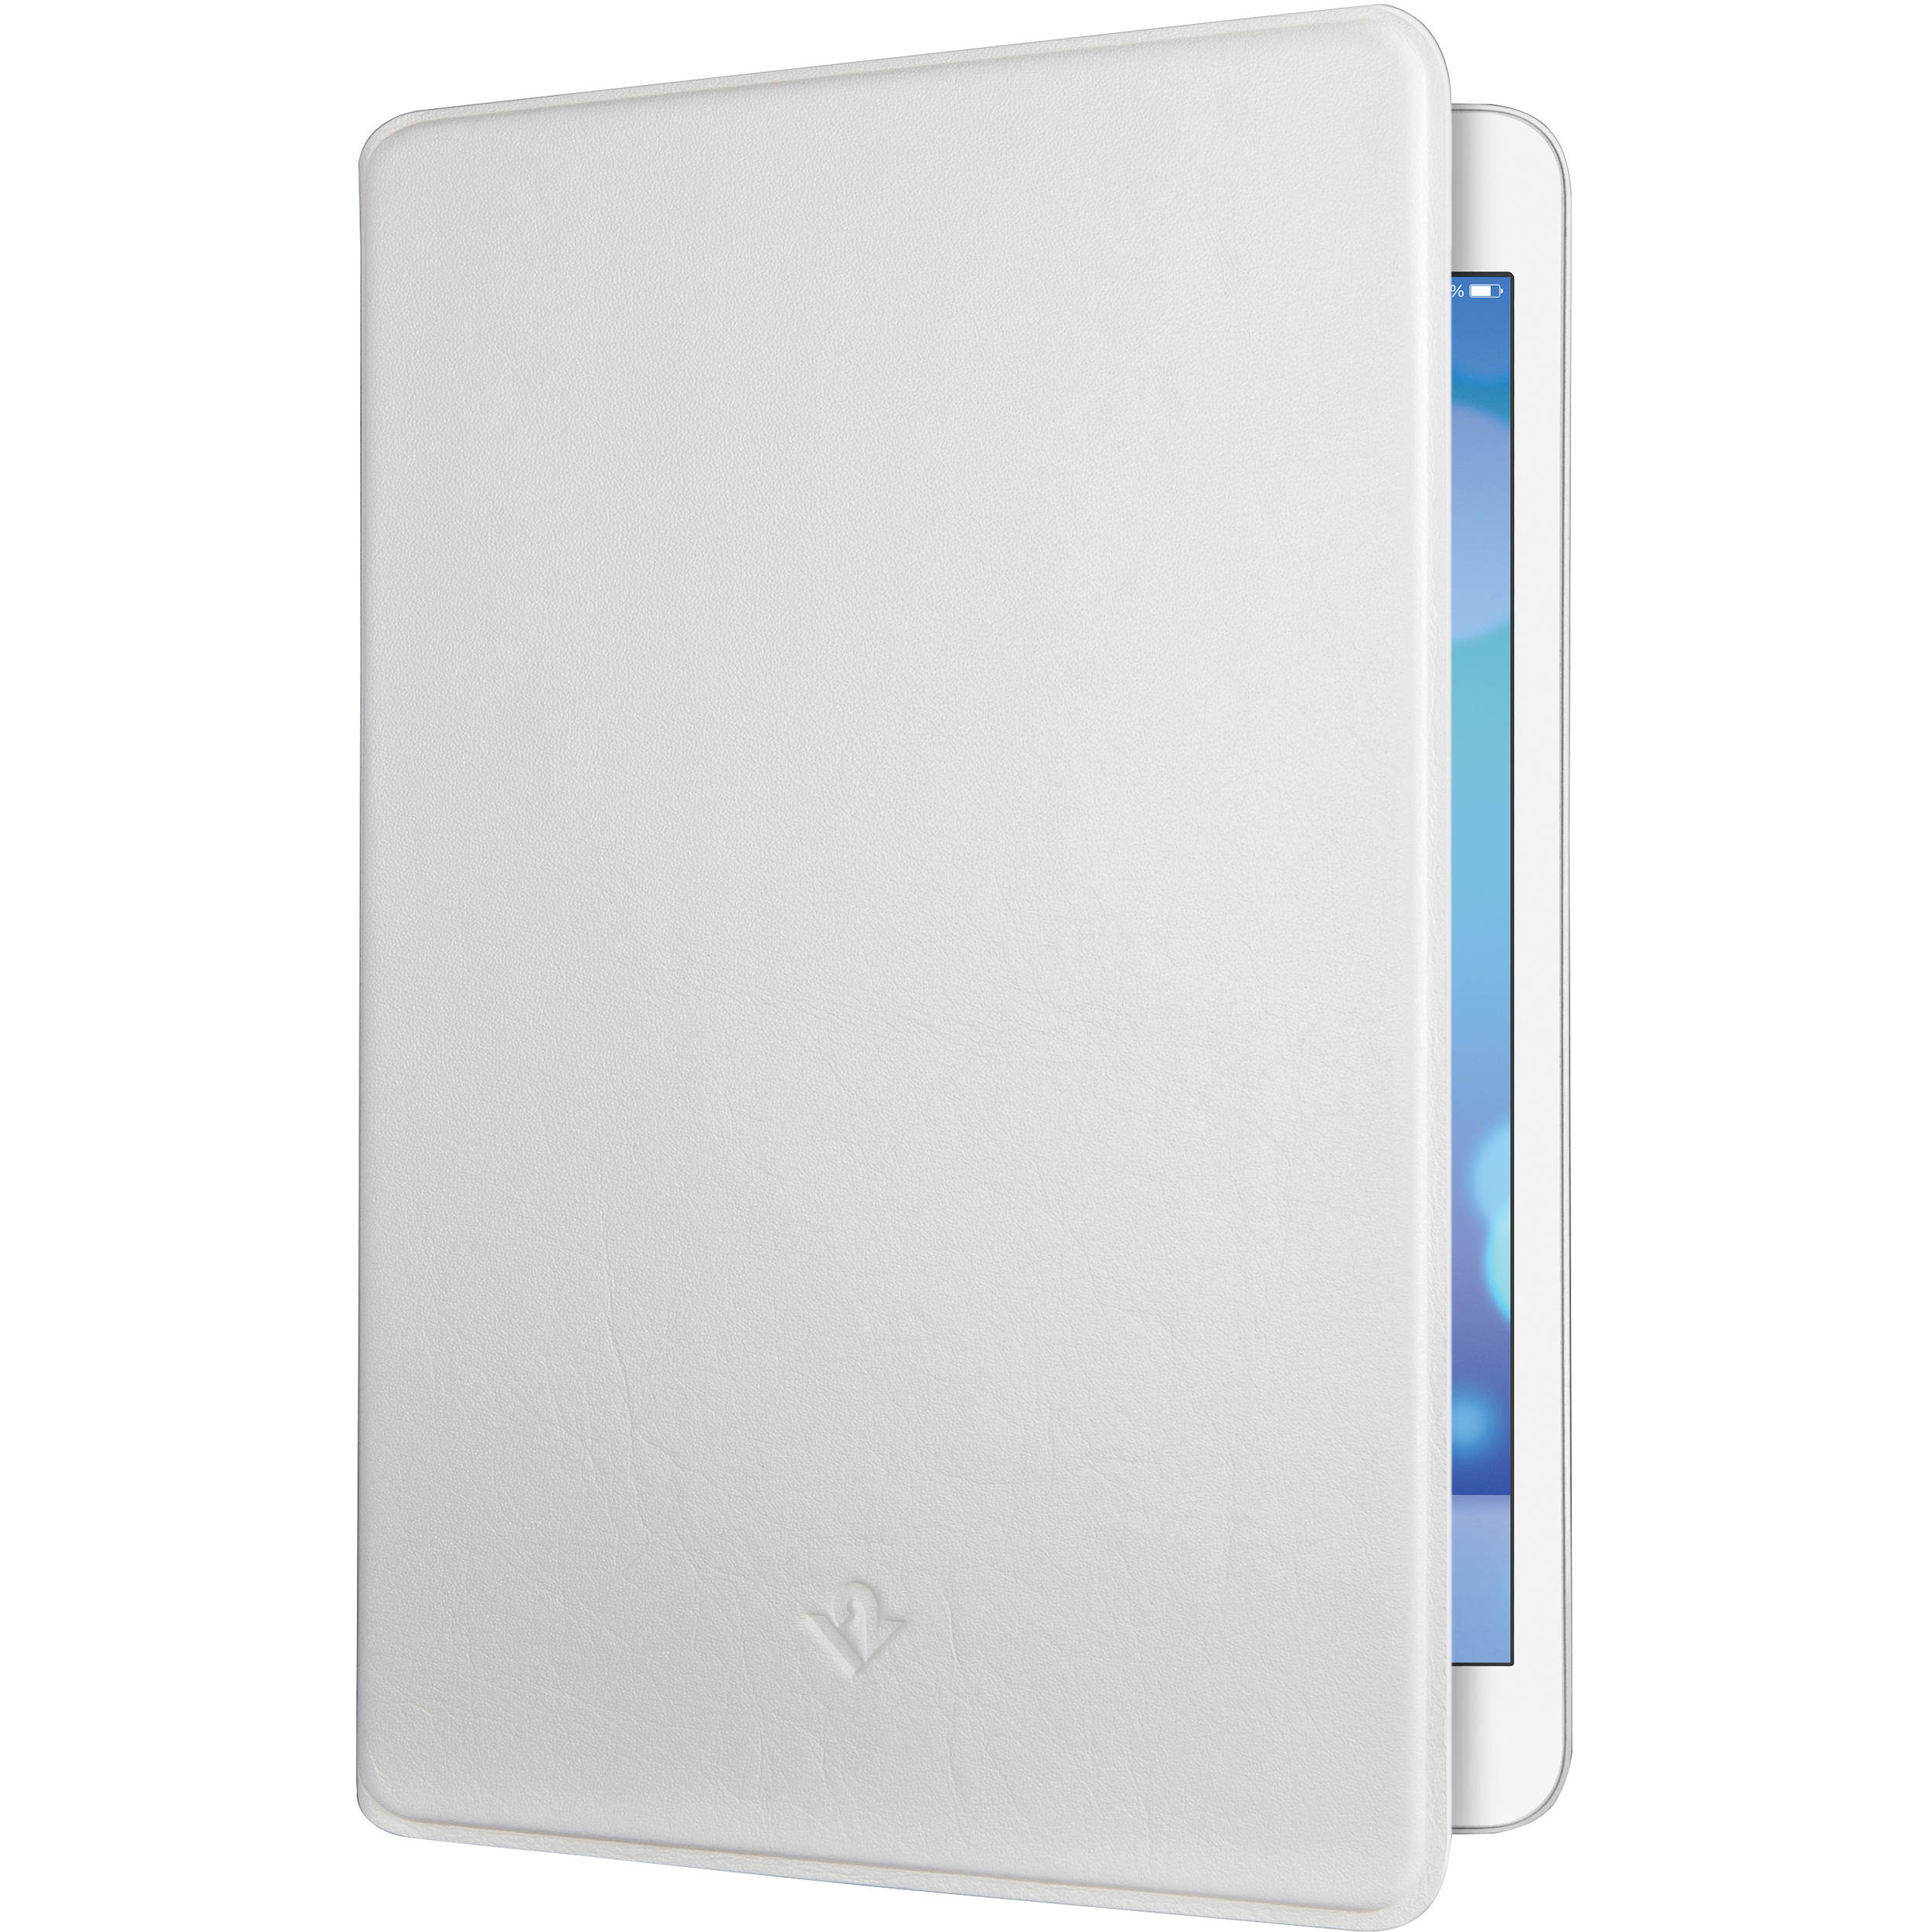 Twelve South SurfacePad for iPad mini (Modern White)